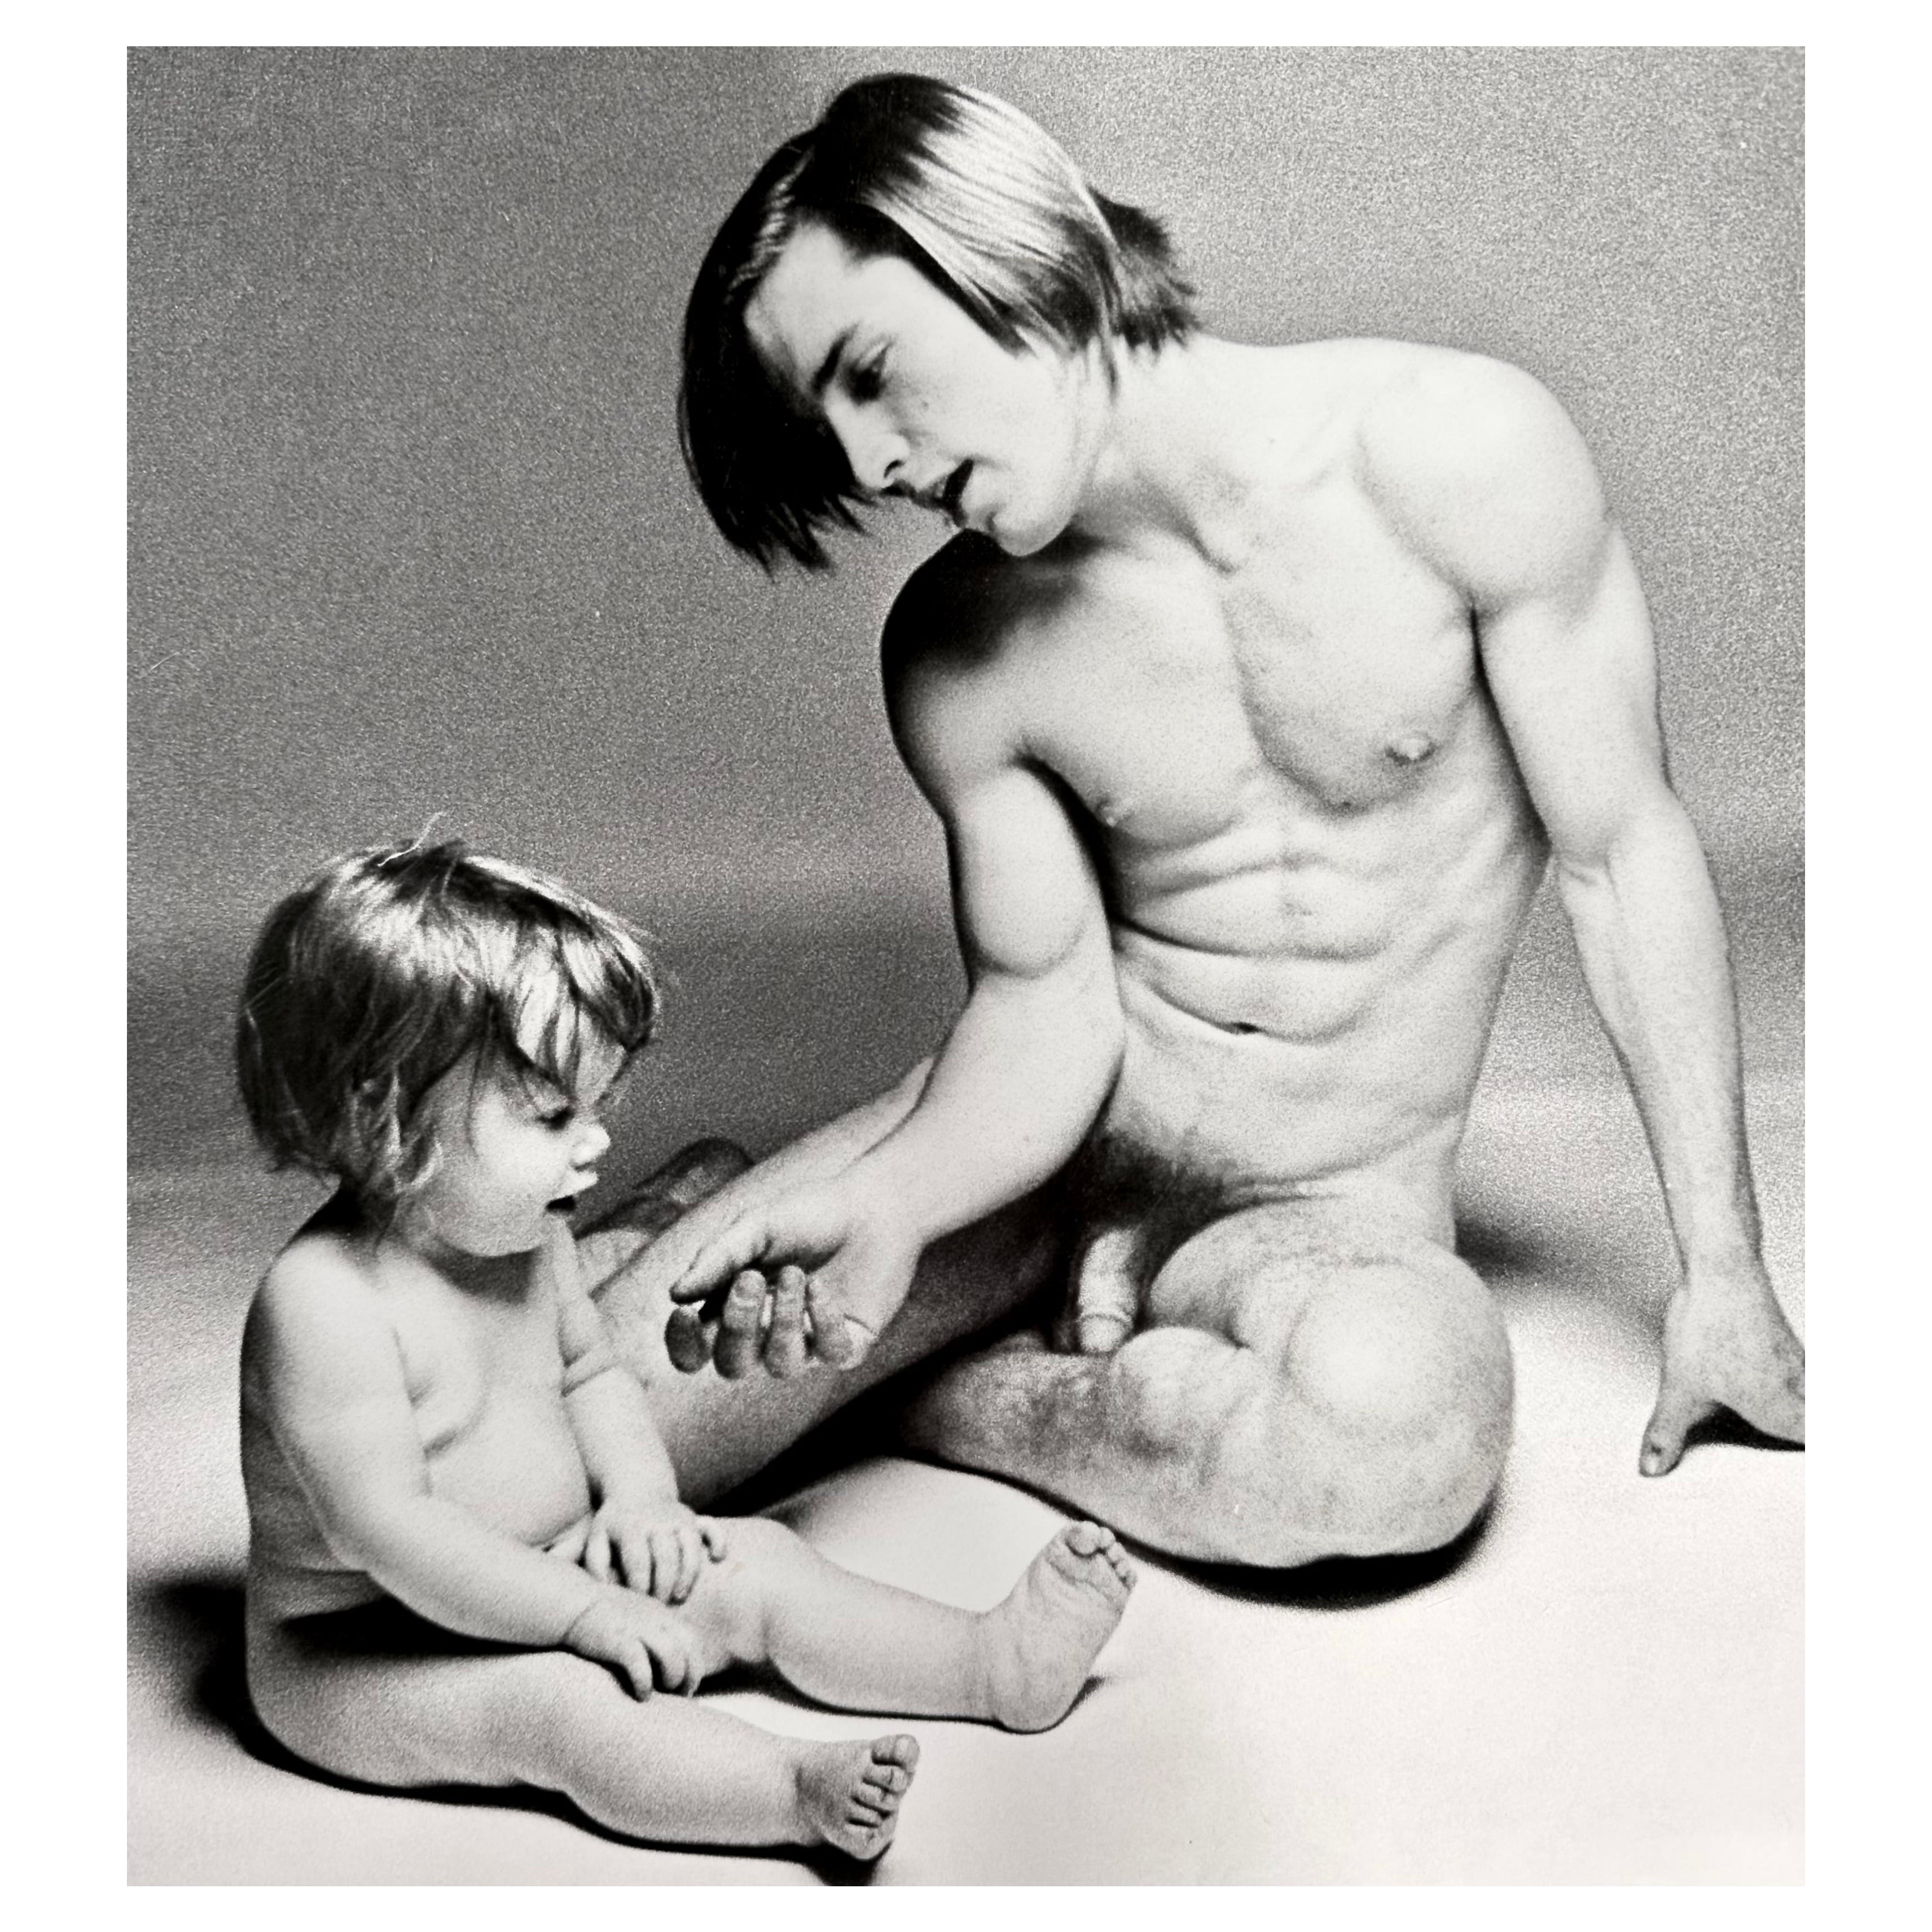 Francesco Scavullo, Andy Warhol’s Flesh: Joe Dallesandro with Child III, 1968. 